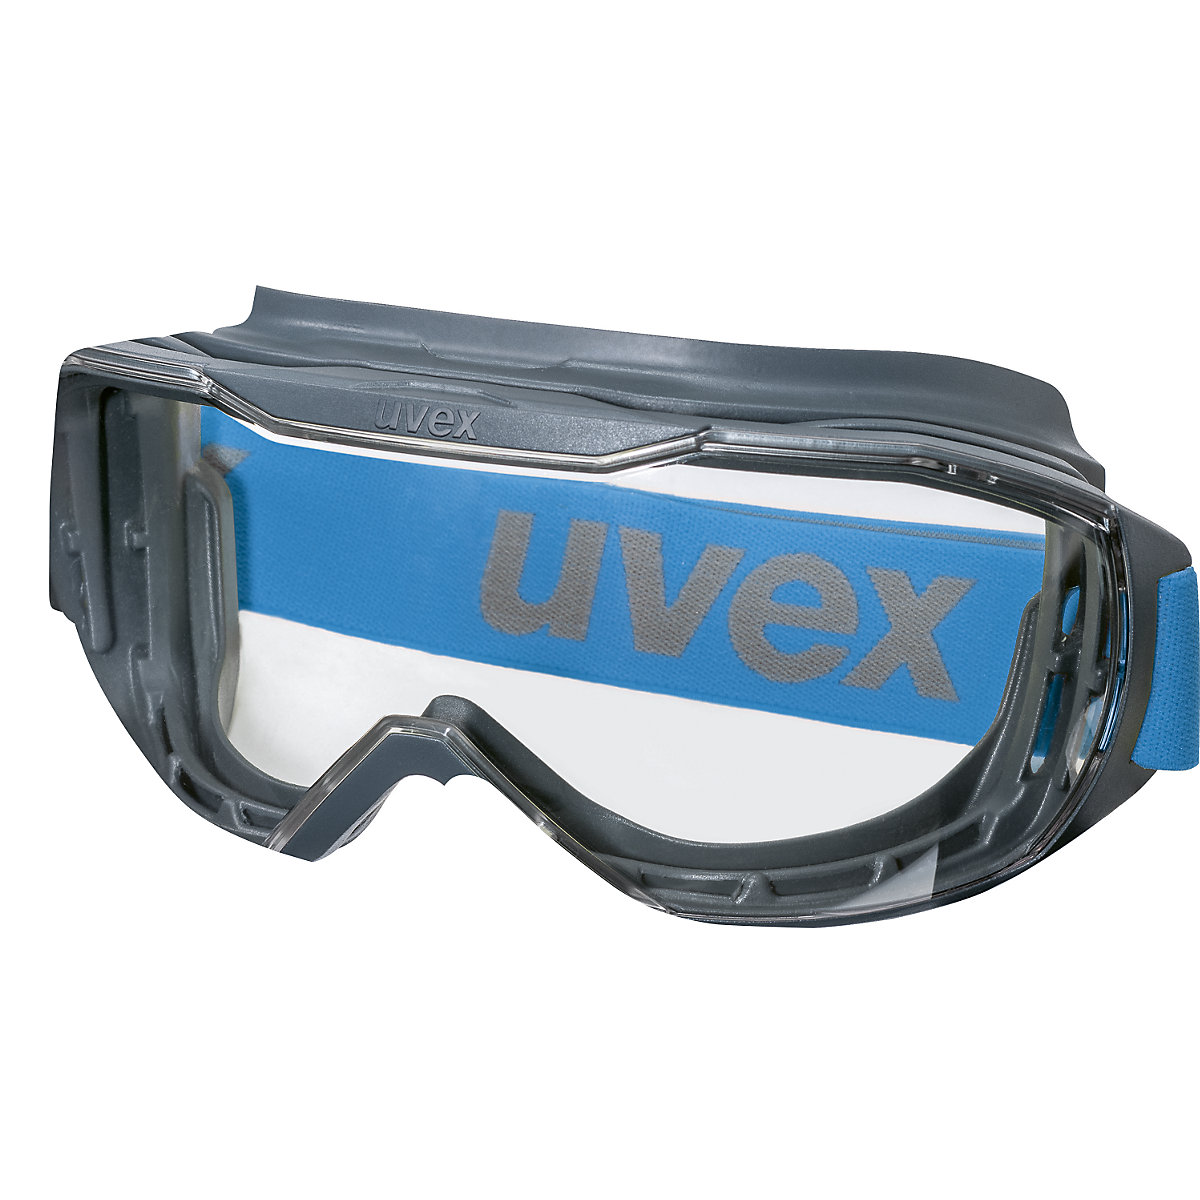 megasonic goggles - Uvex